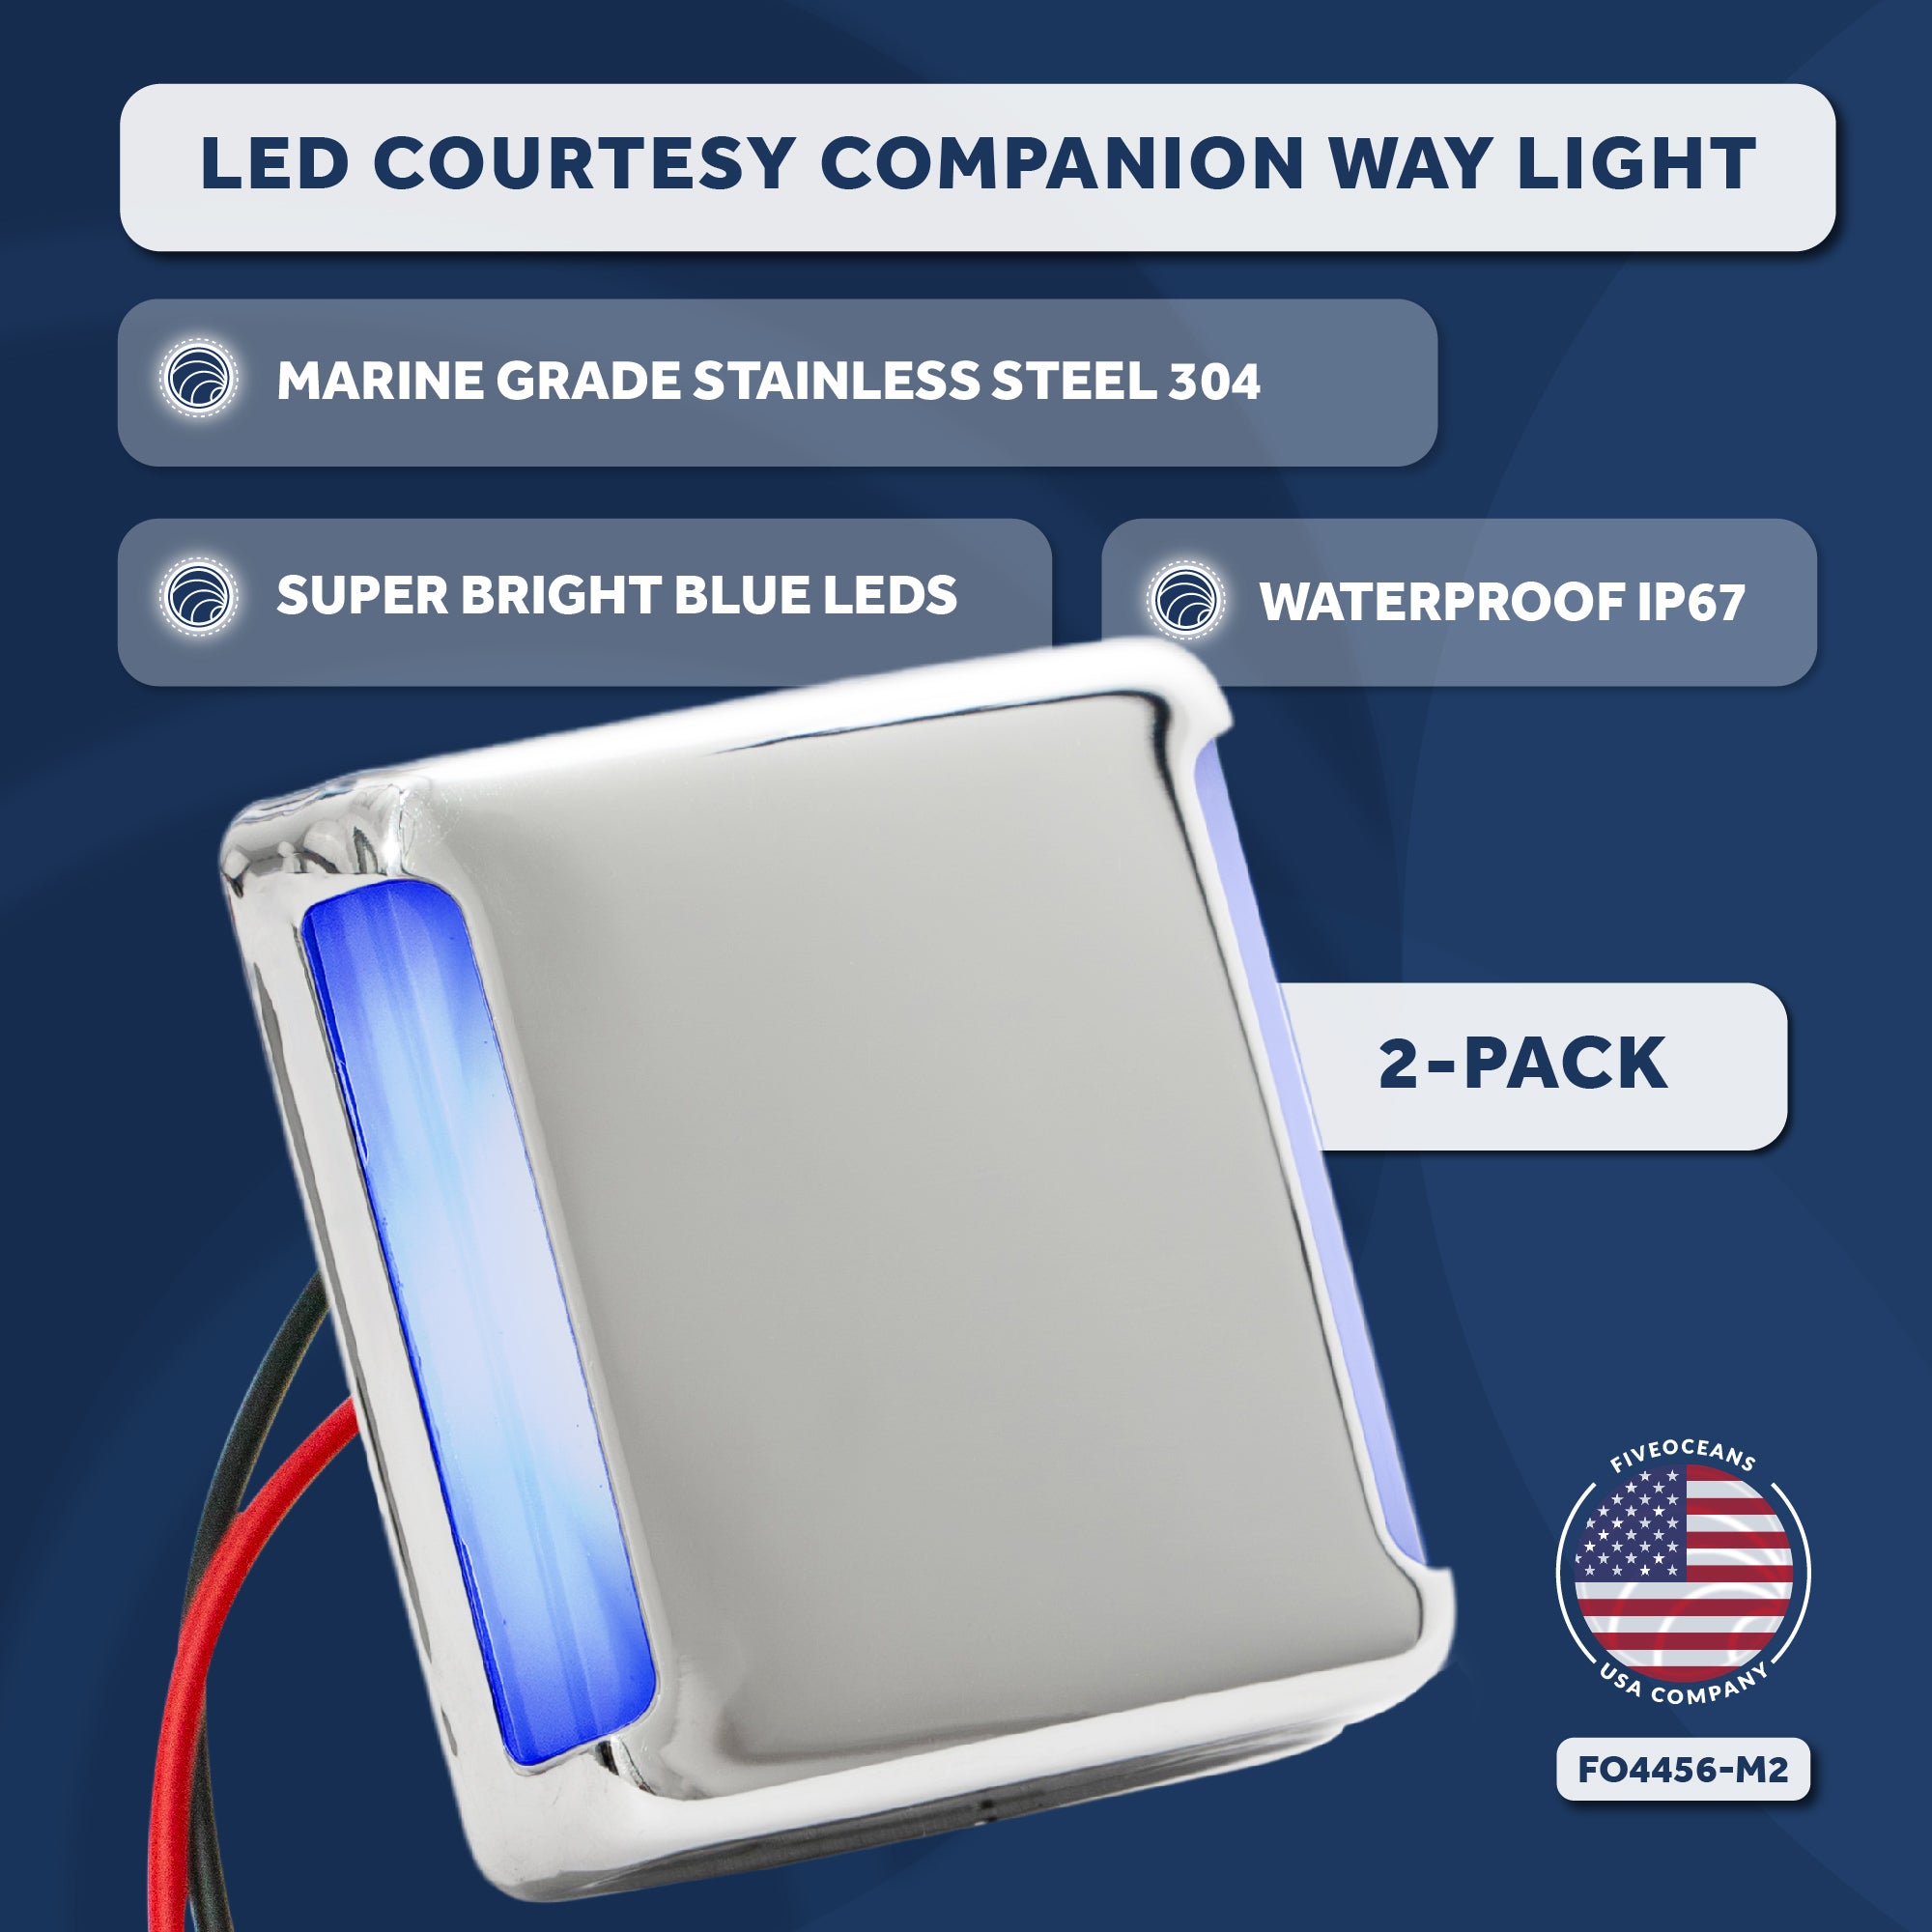 LED Courtesy Companion Way Light, Square, Blue, 2-Pack - FO4456-M2